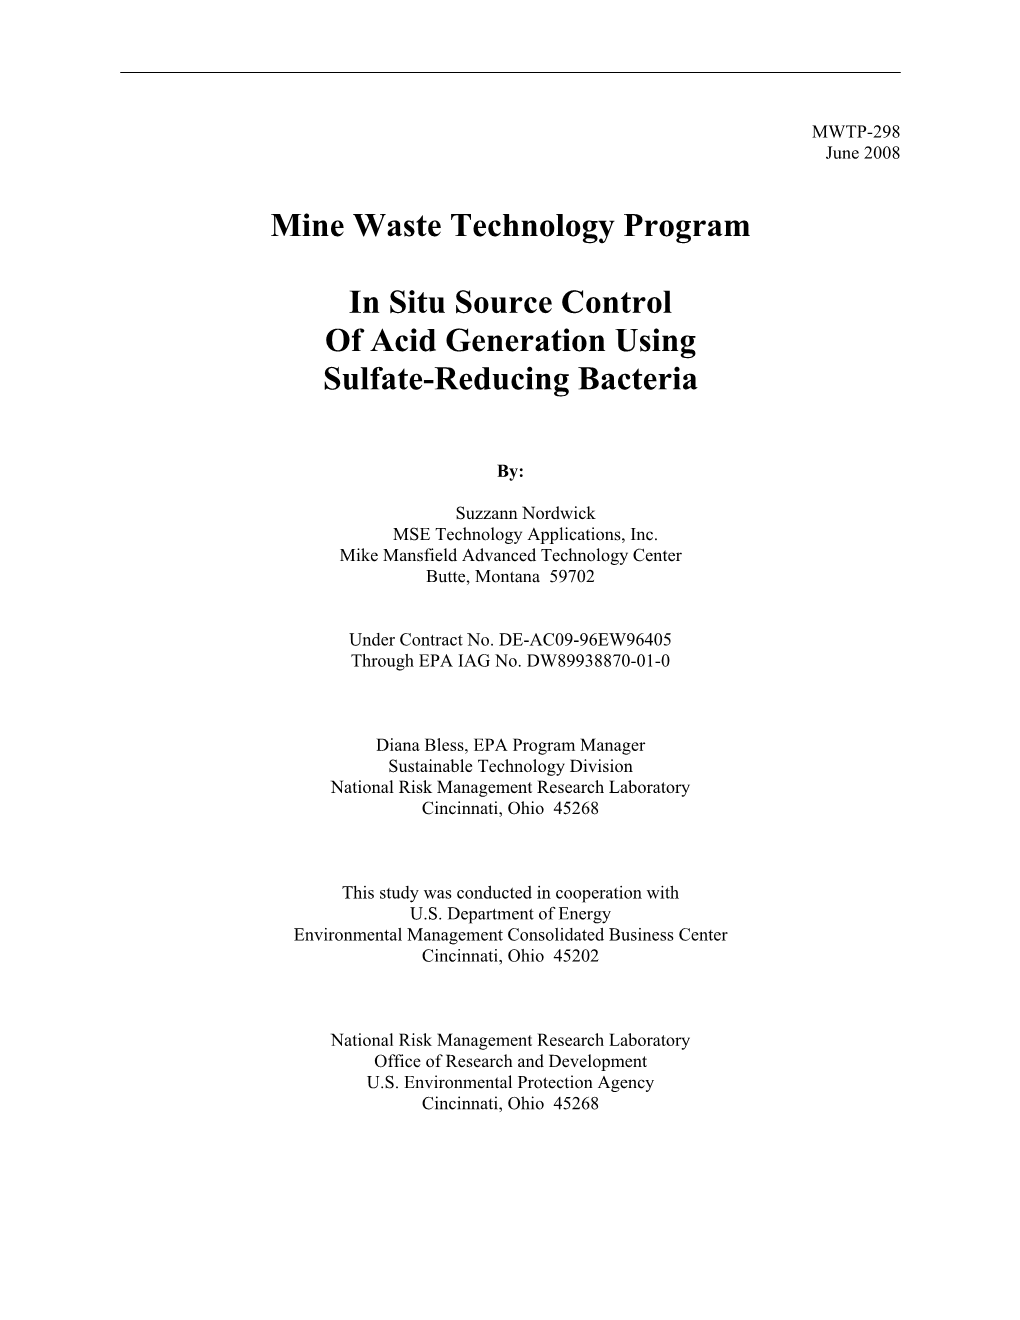 Mine Waste Technology Program in Situ Source Control of Acid